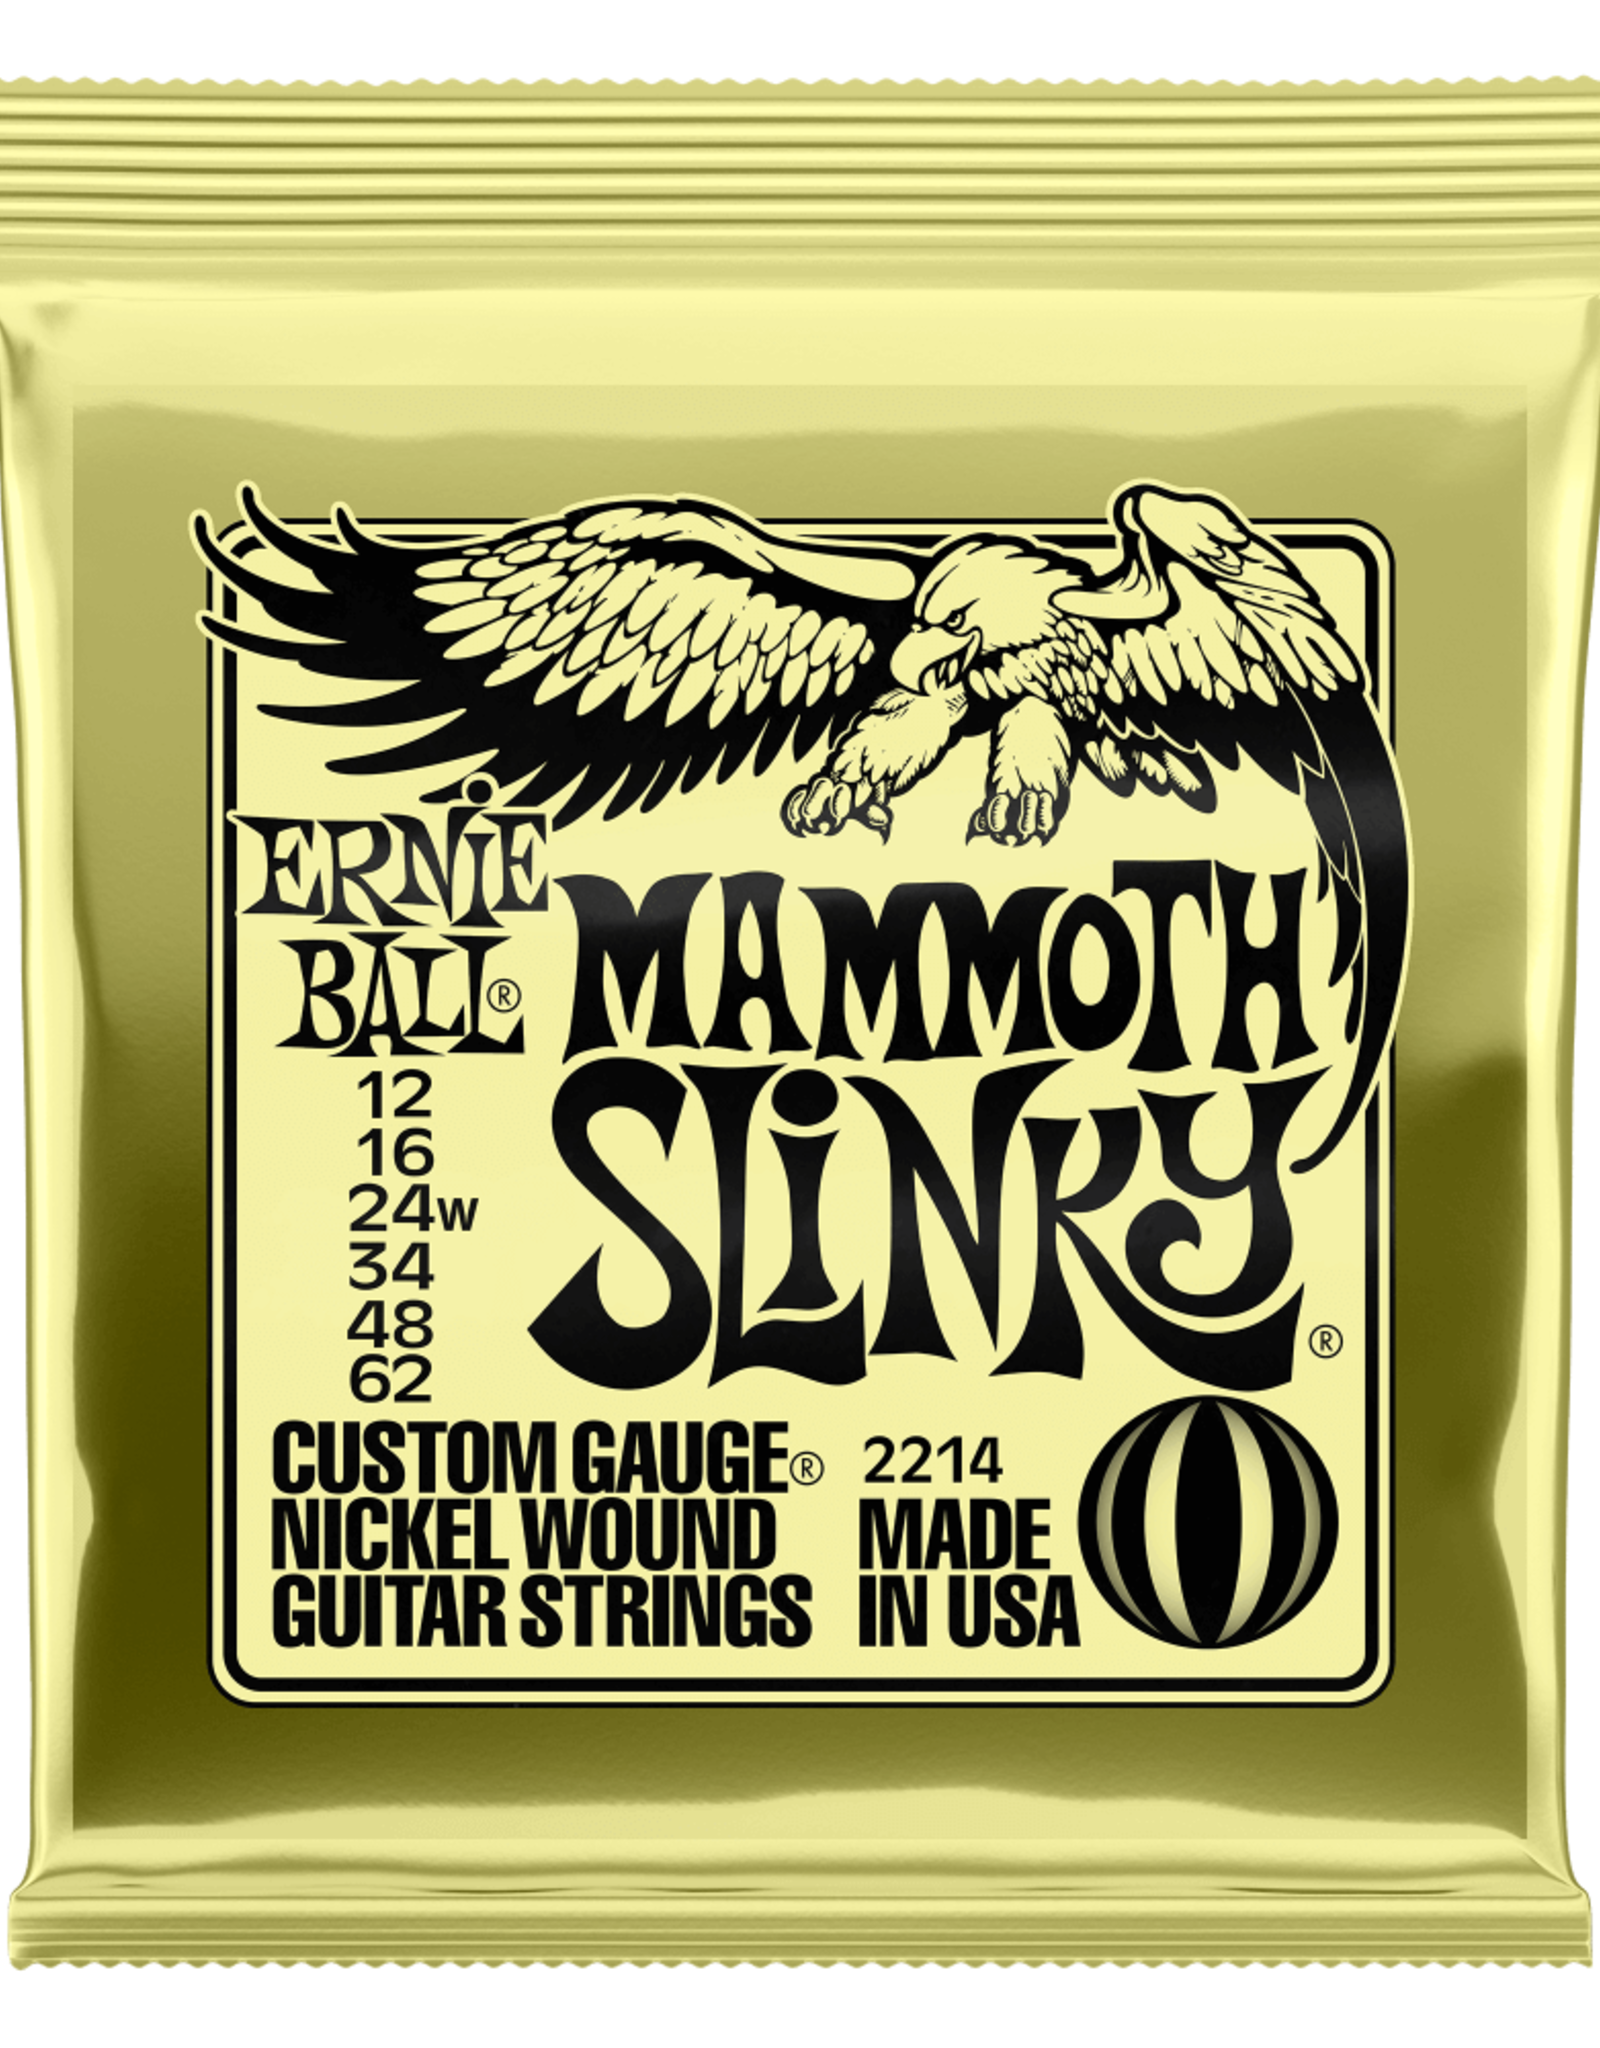 Ernie Ball Ernie Ball Mammoth Slinky Nickel Wound Electric Guitar Strings - 12-62 (wound G) Gauge